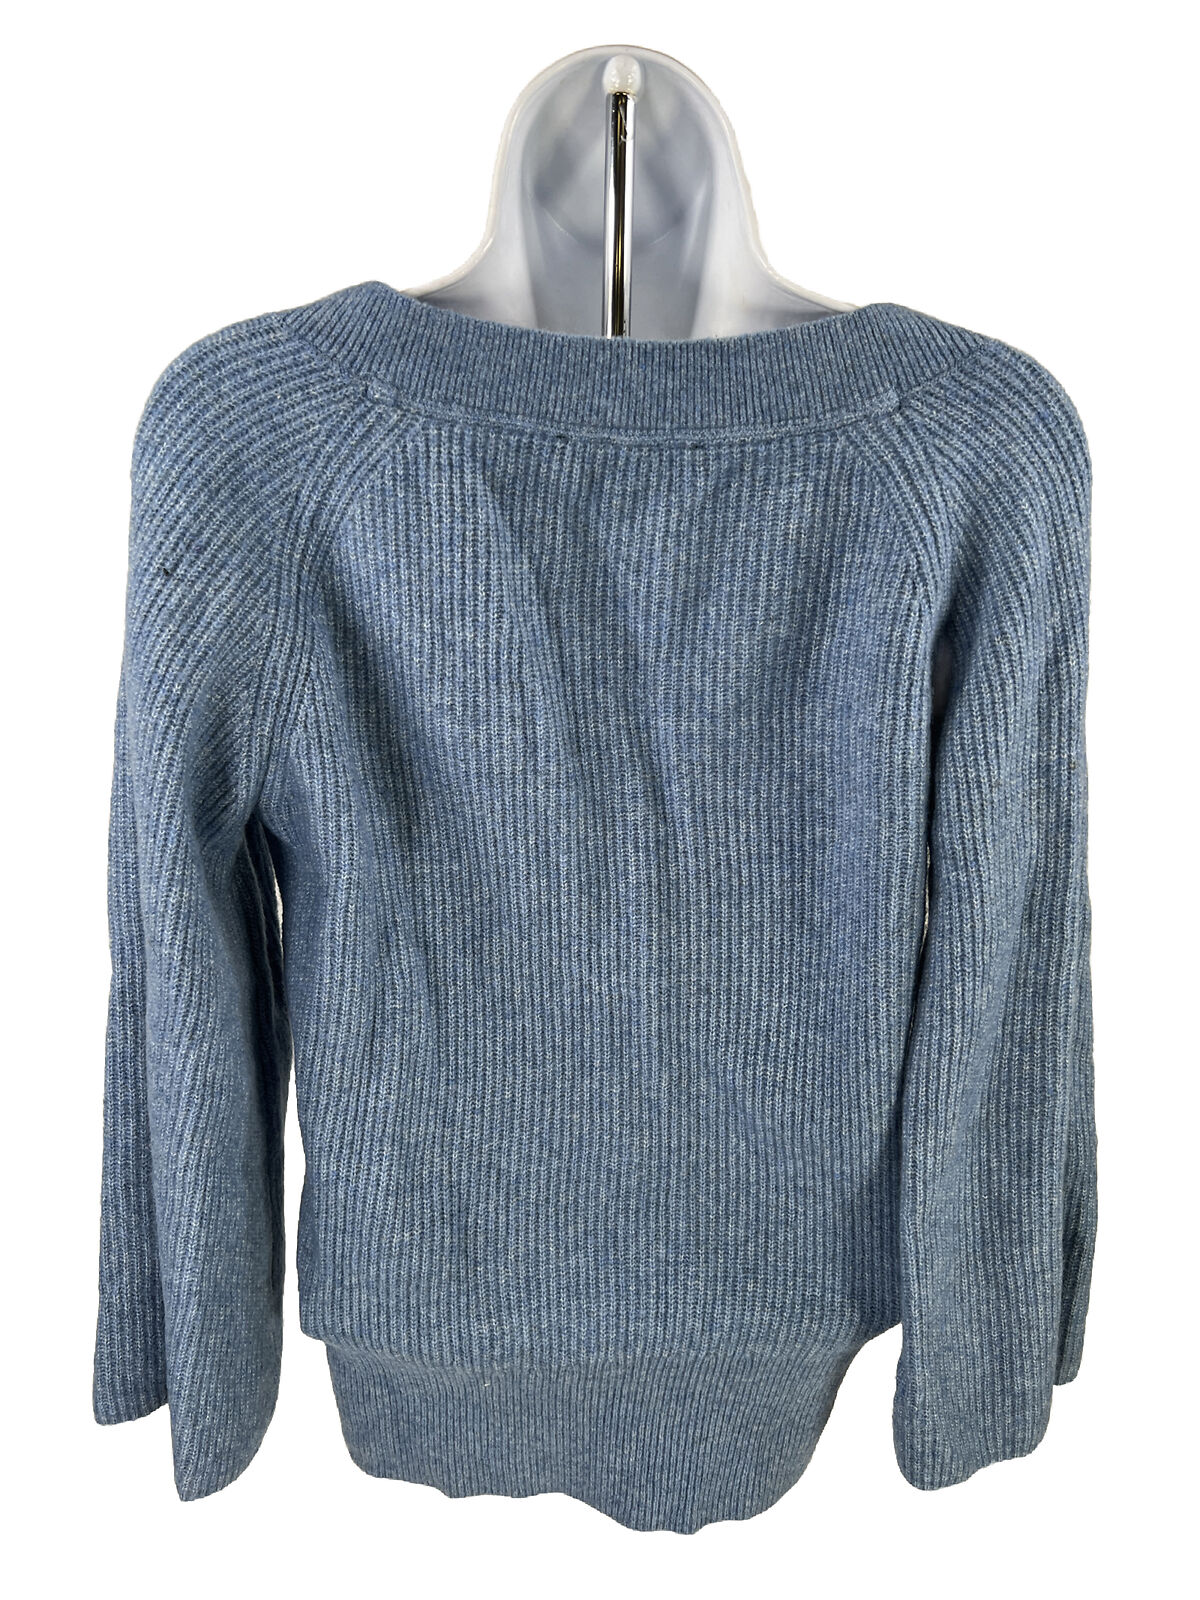 White House Black Market Women's Blue 3/4 Sleeve Wool Blend Sweater - M